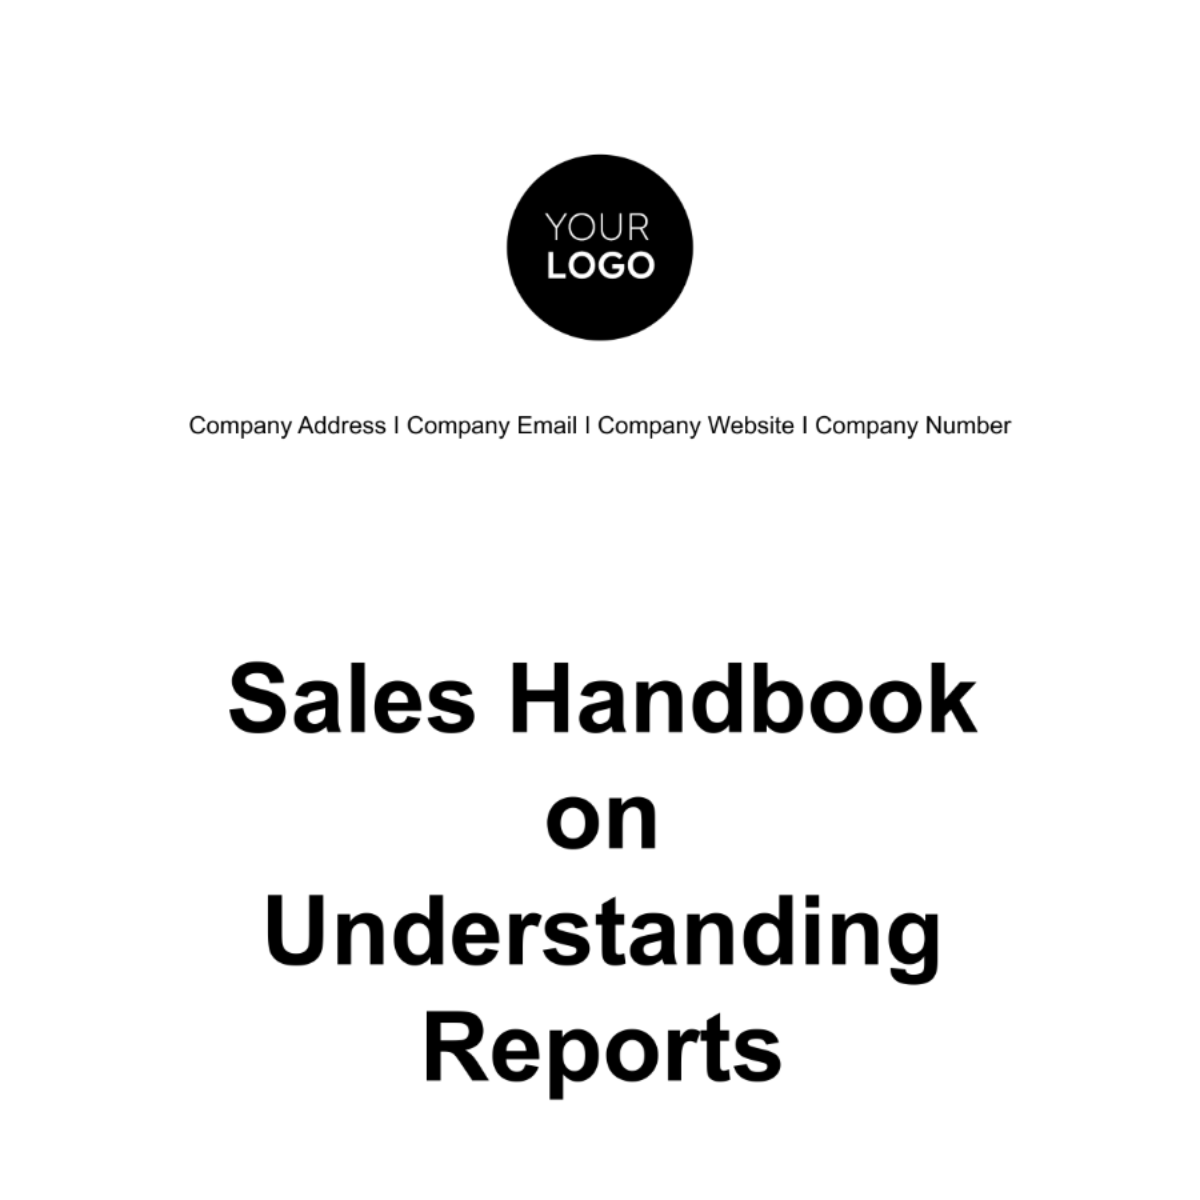 Free Sales Handbook on Understanding Reports Template